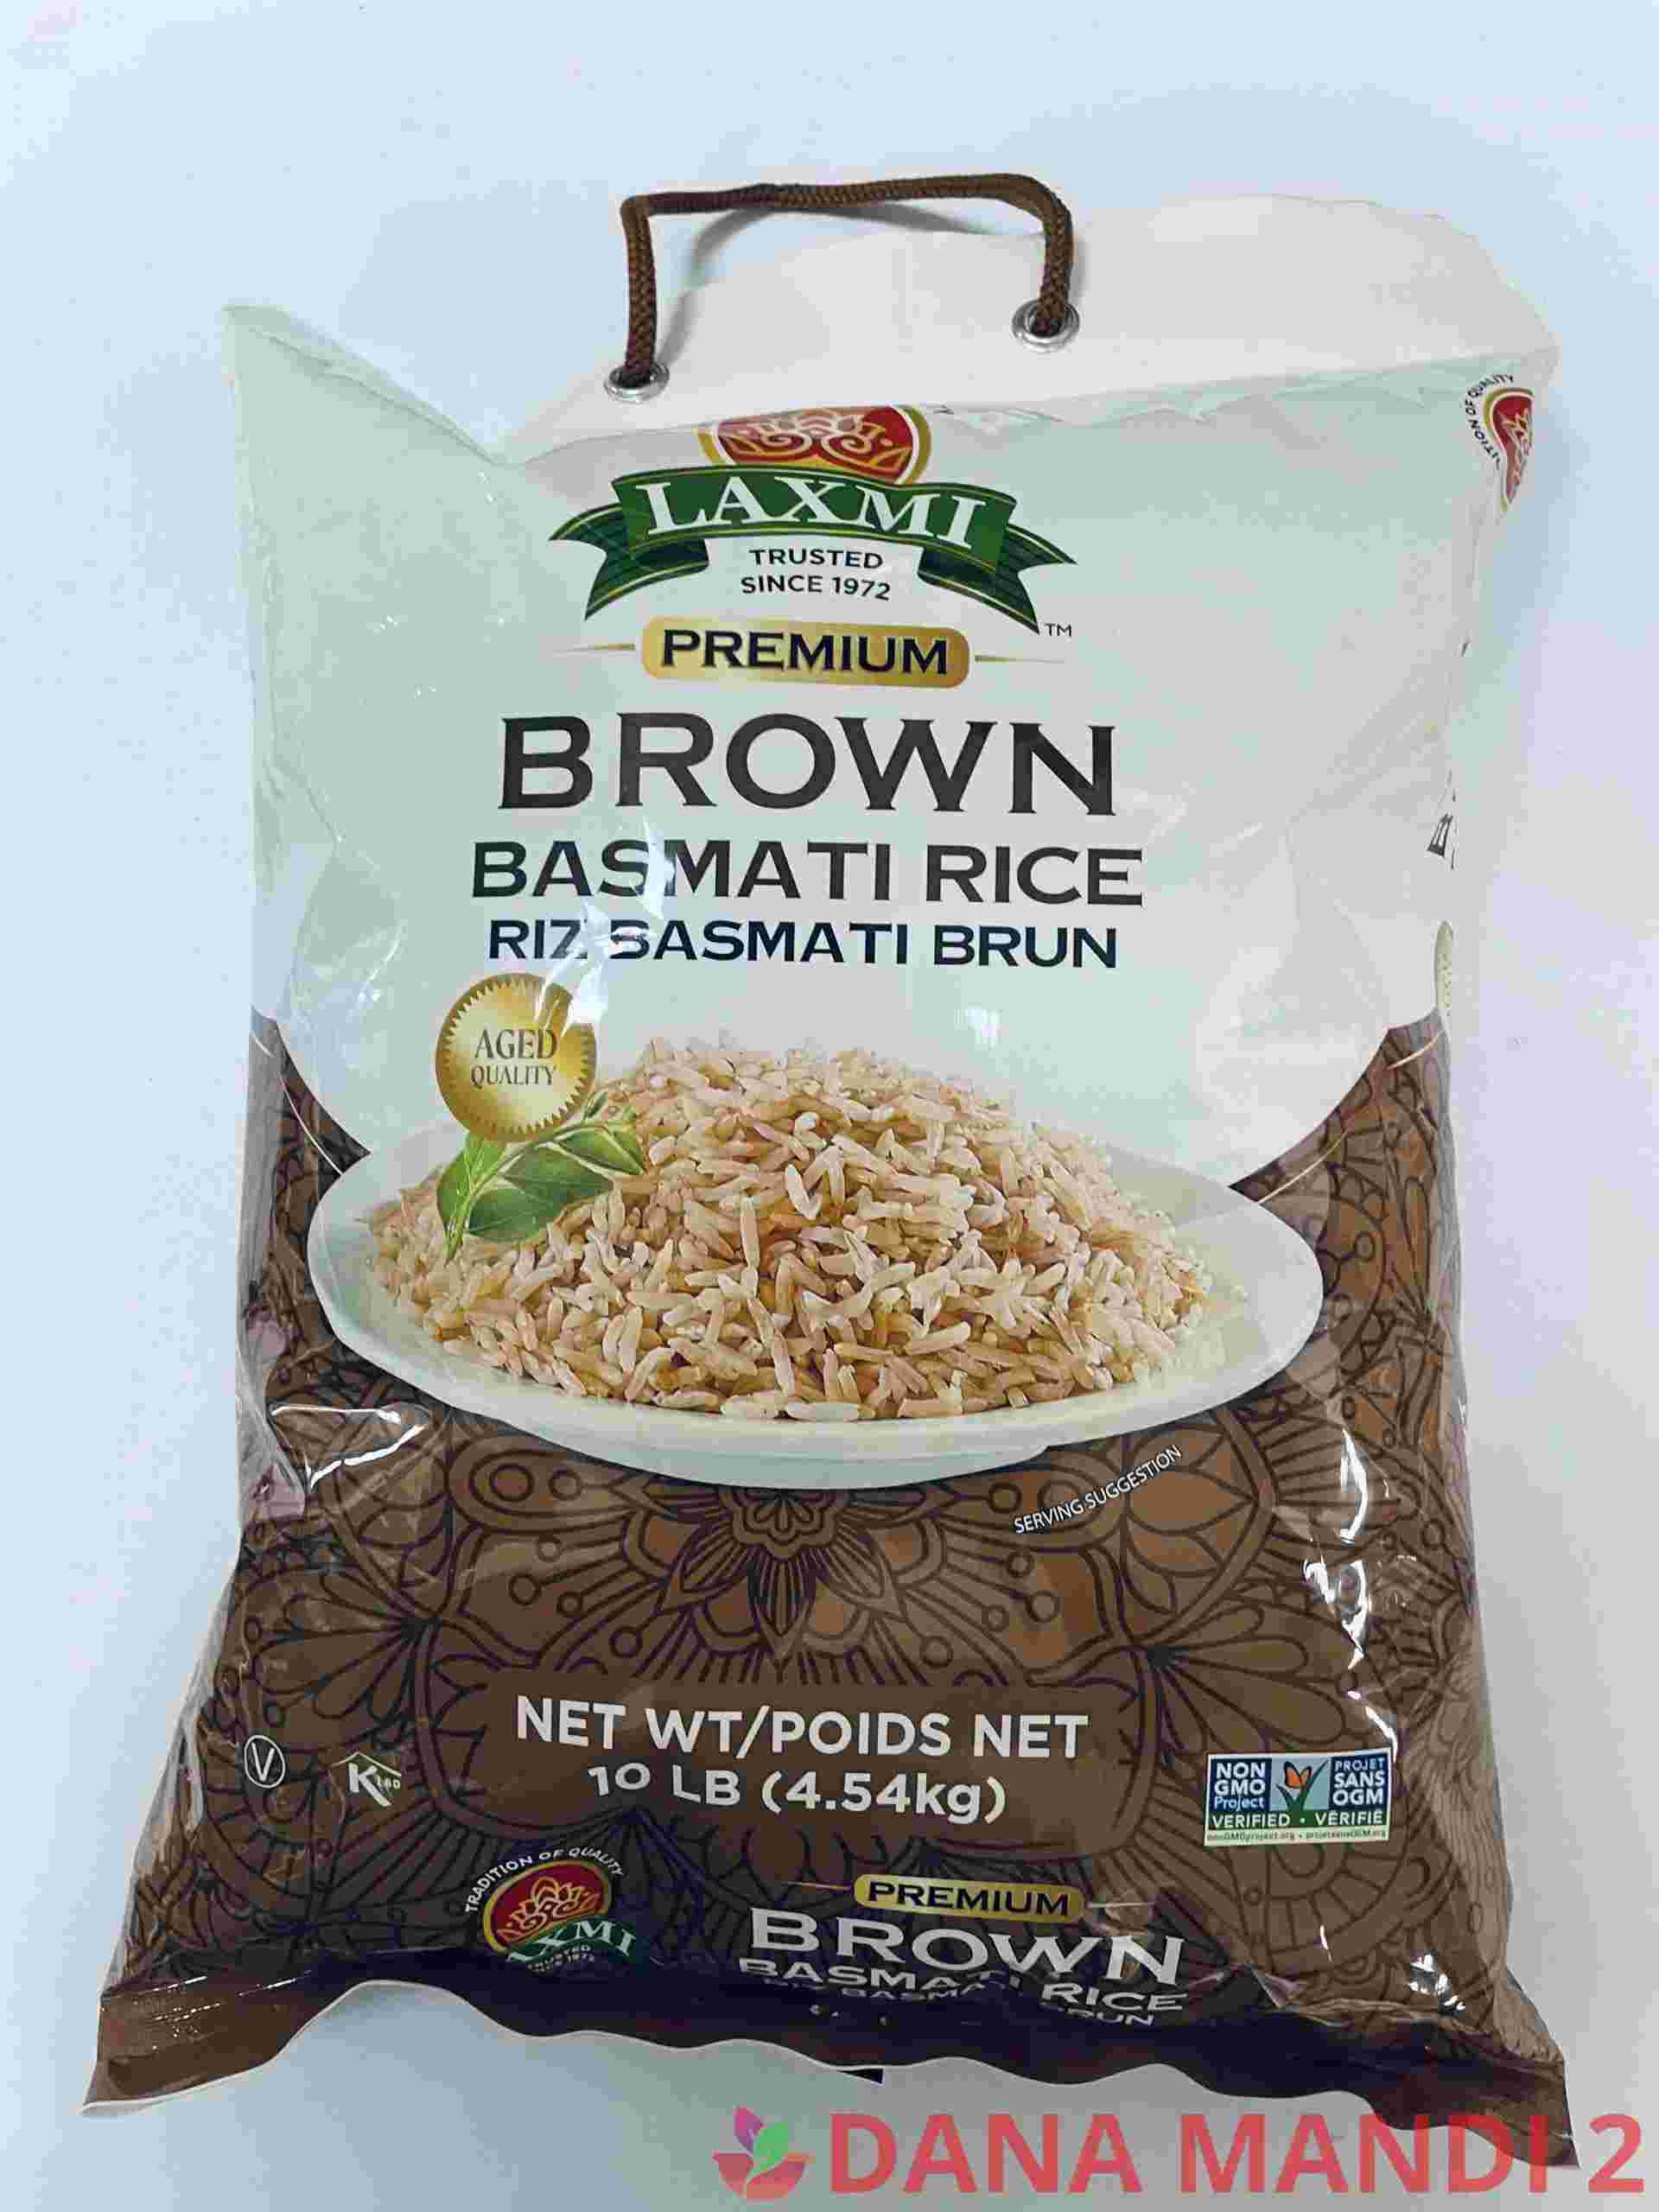 Laxmi Brown Basmati Rice